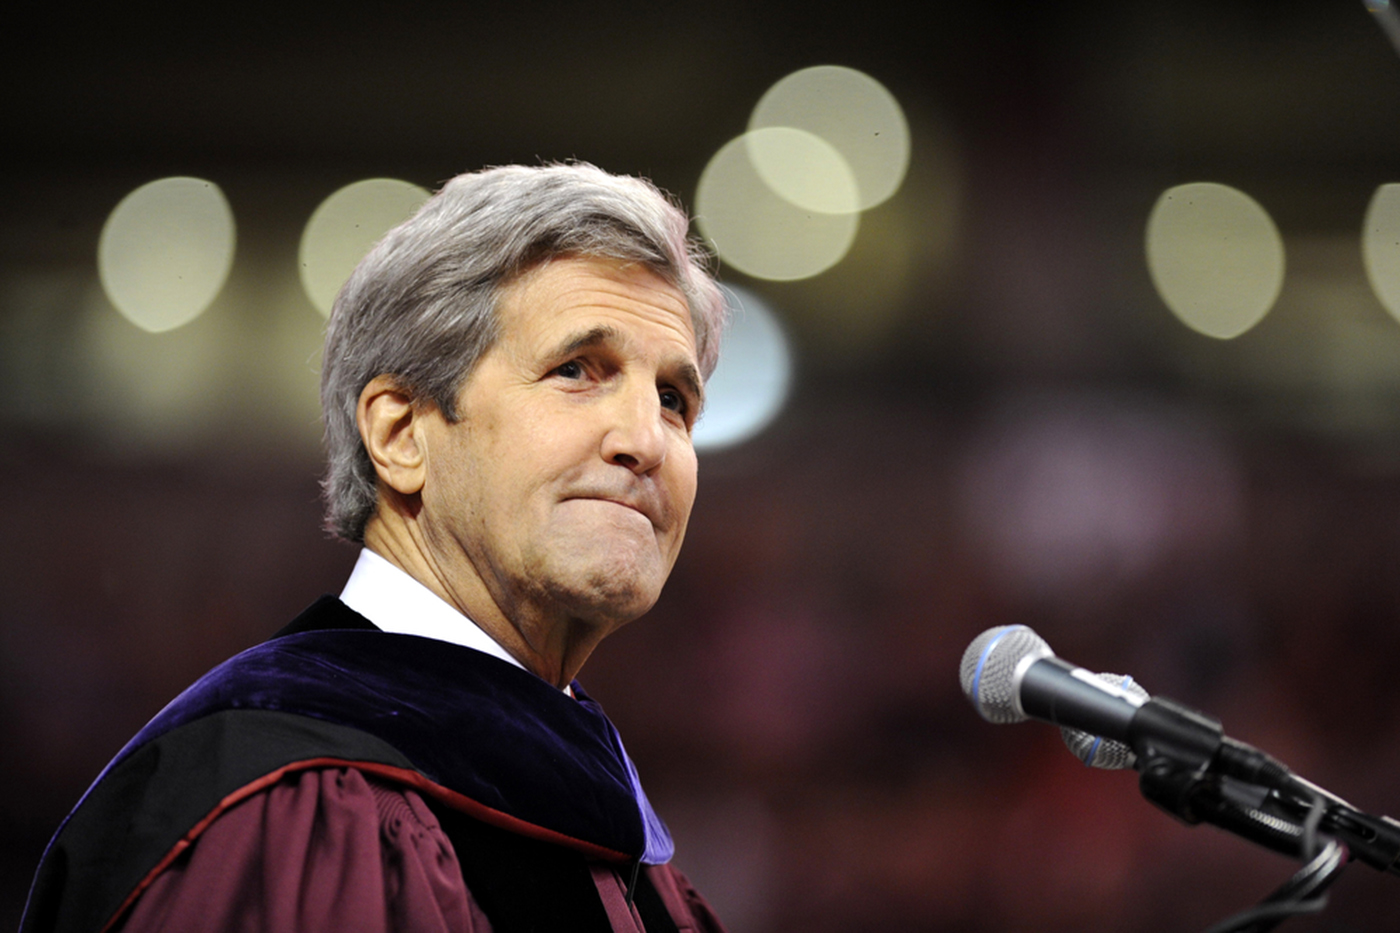 John F. Kerry in Commencement regalia, speaking at the podium